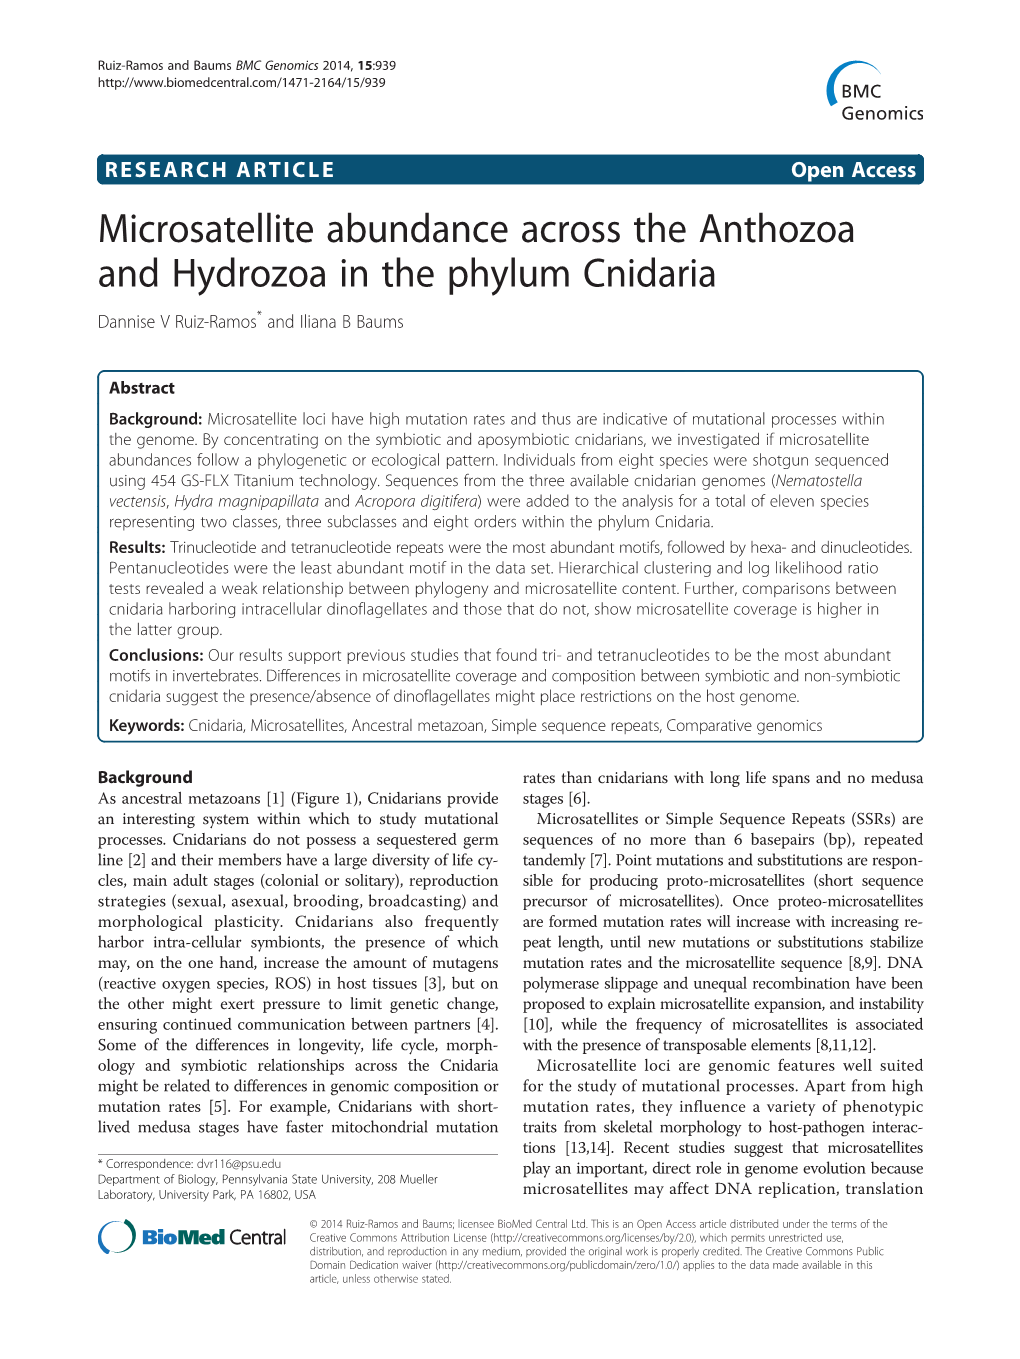 Microsatellite Abundance Across the Anthozoa and Hydrozoa in the Phylum Cnidaria Dannise V Ruiz-Ramos* and Iliana B Baums